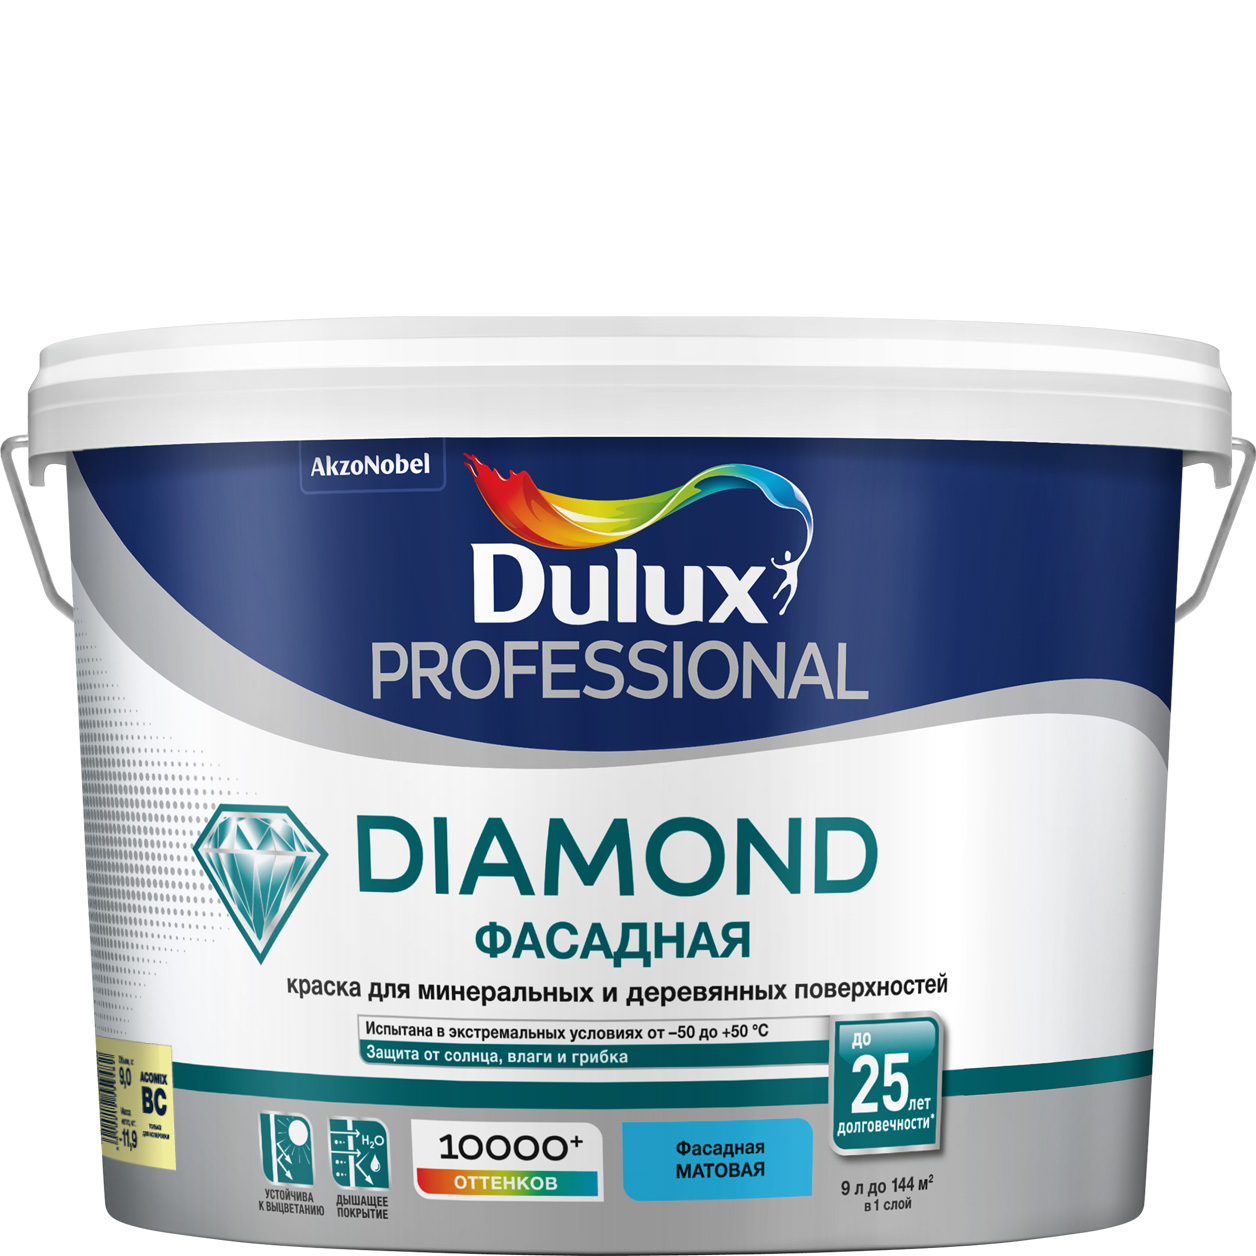 Dx_DiamondFacade_BC_9L.jpg